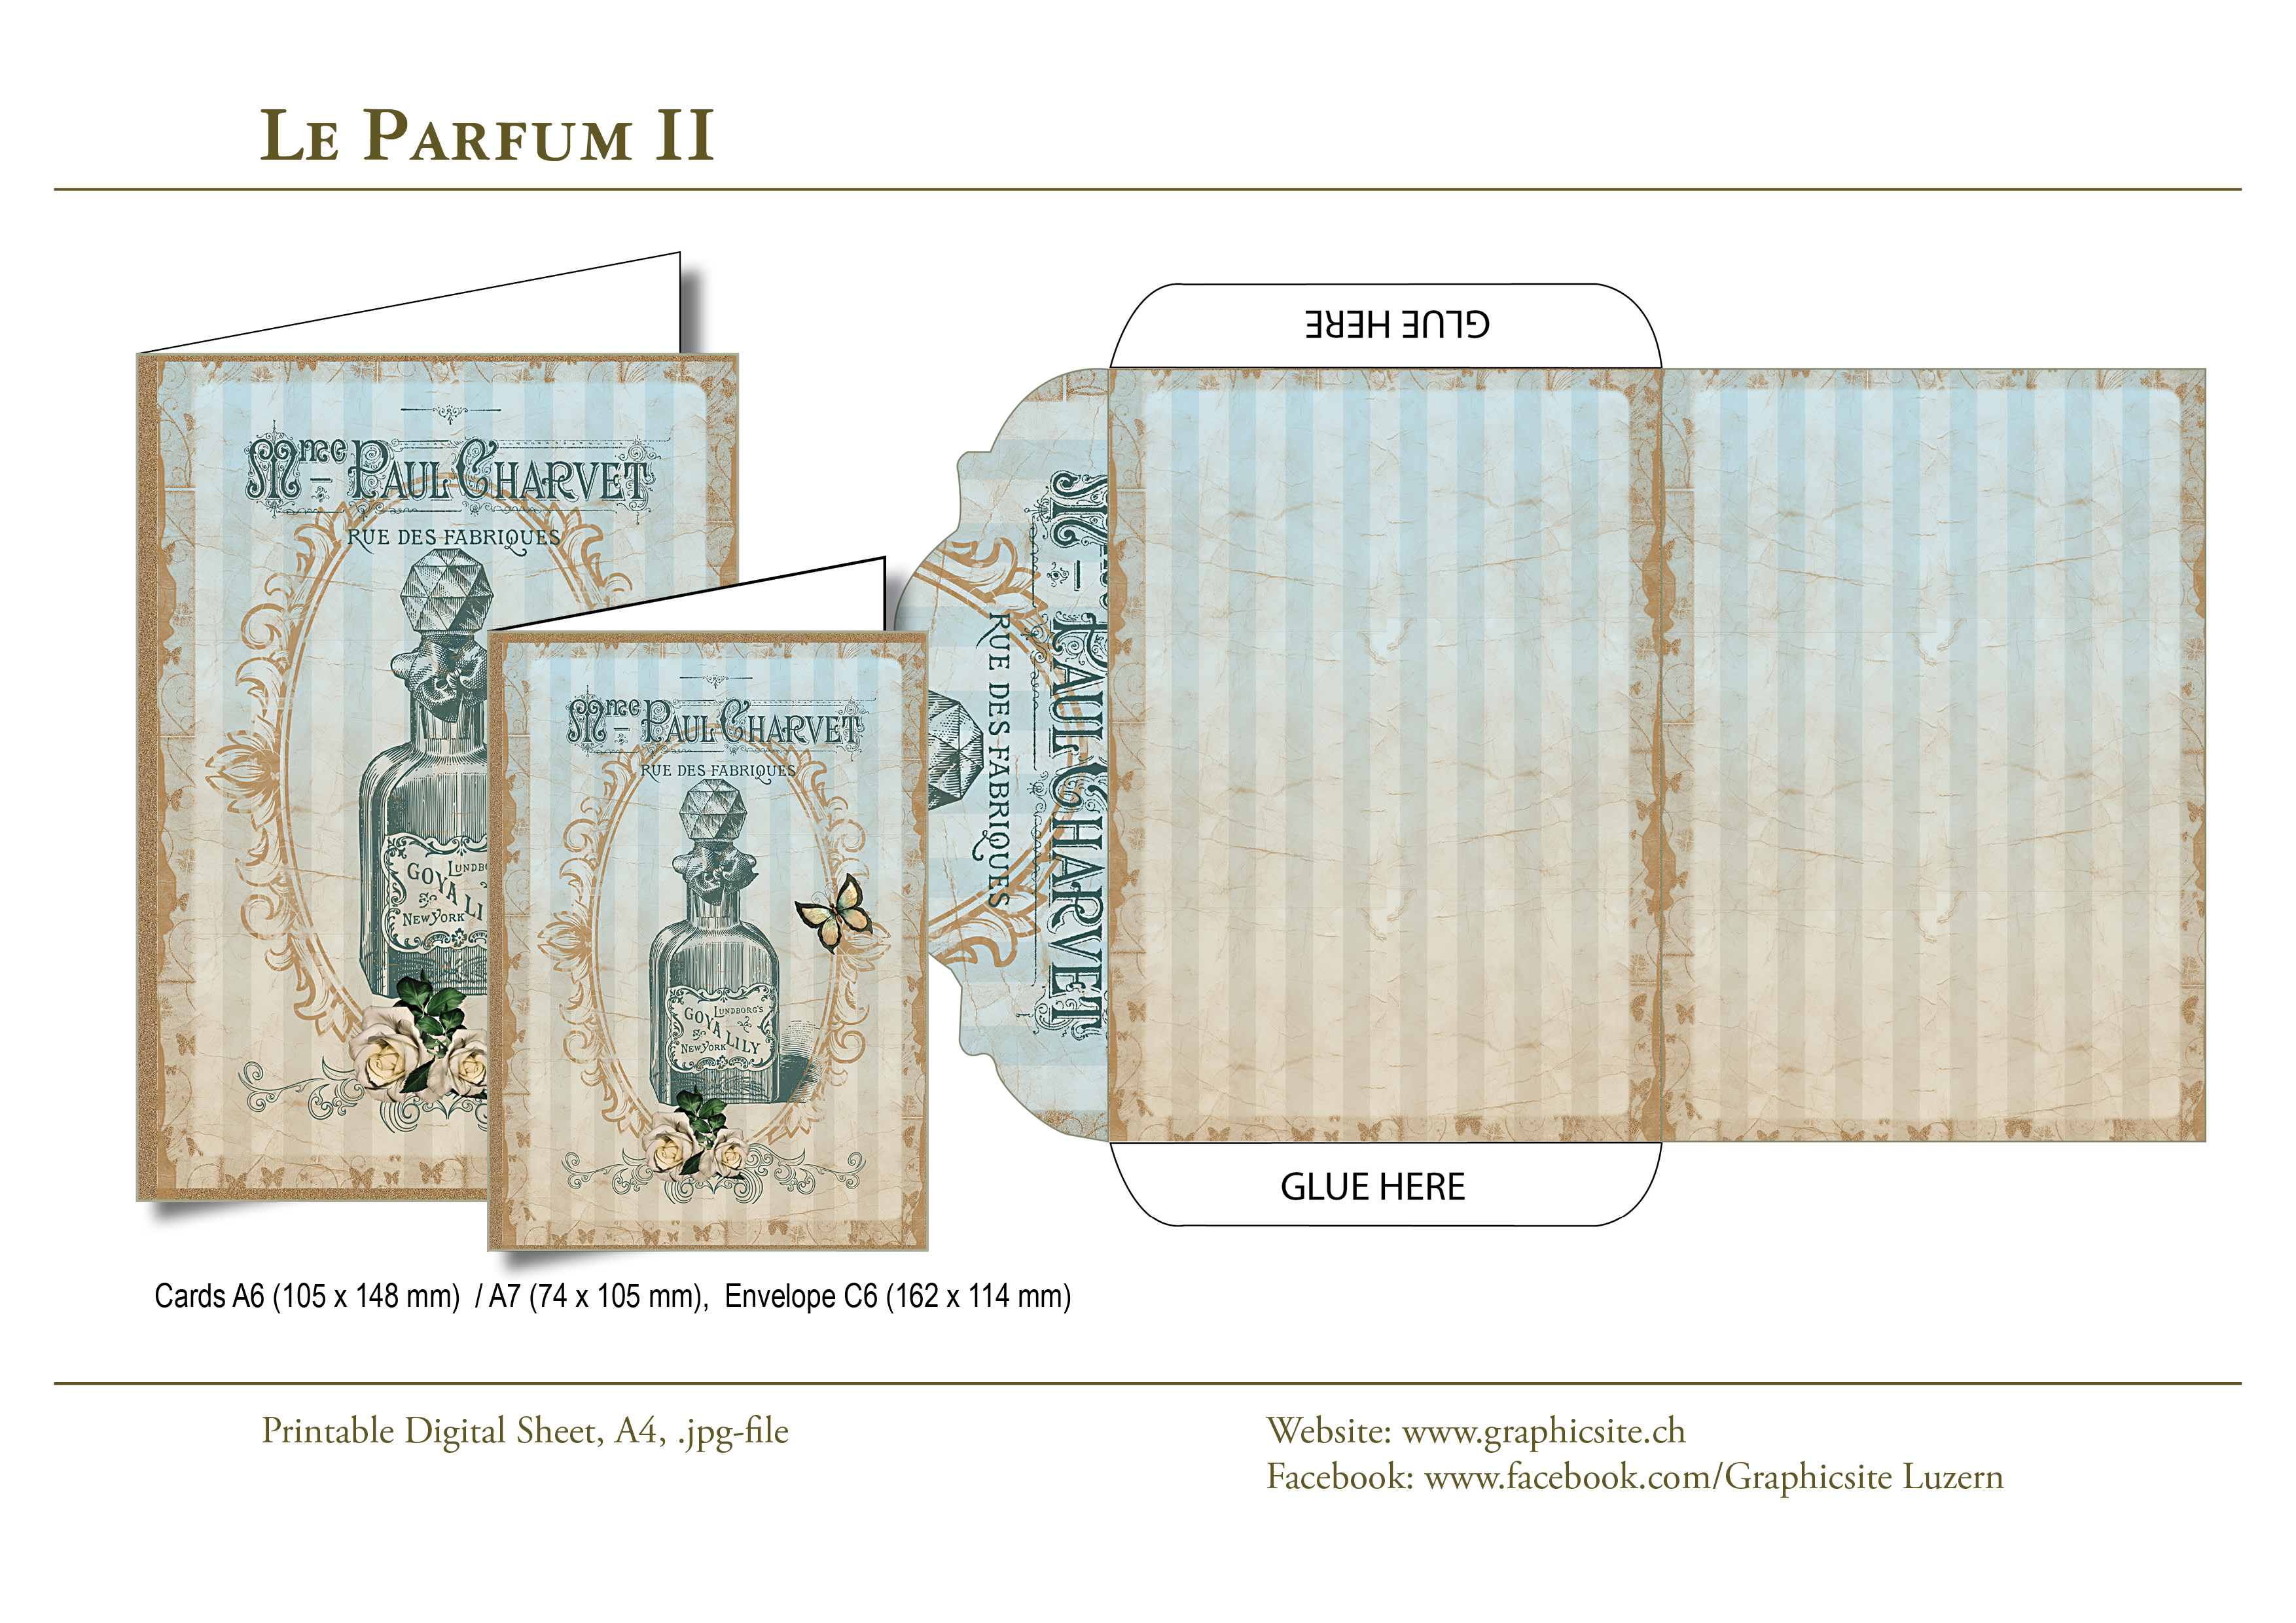 Printable Digital Sheet - DIN A-Formats - Le Parfum II